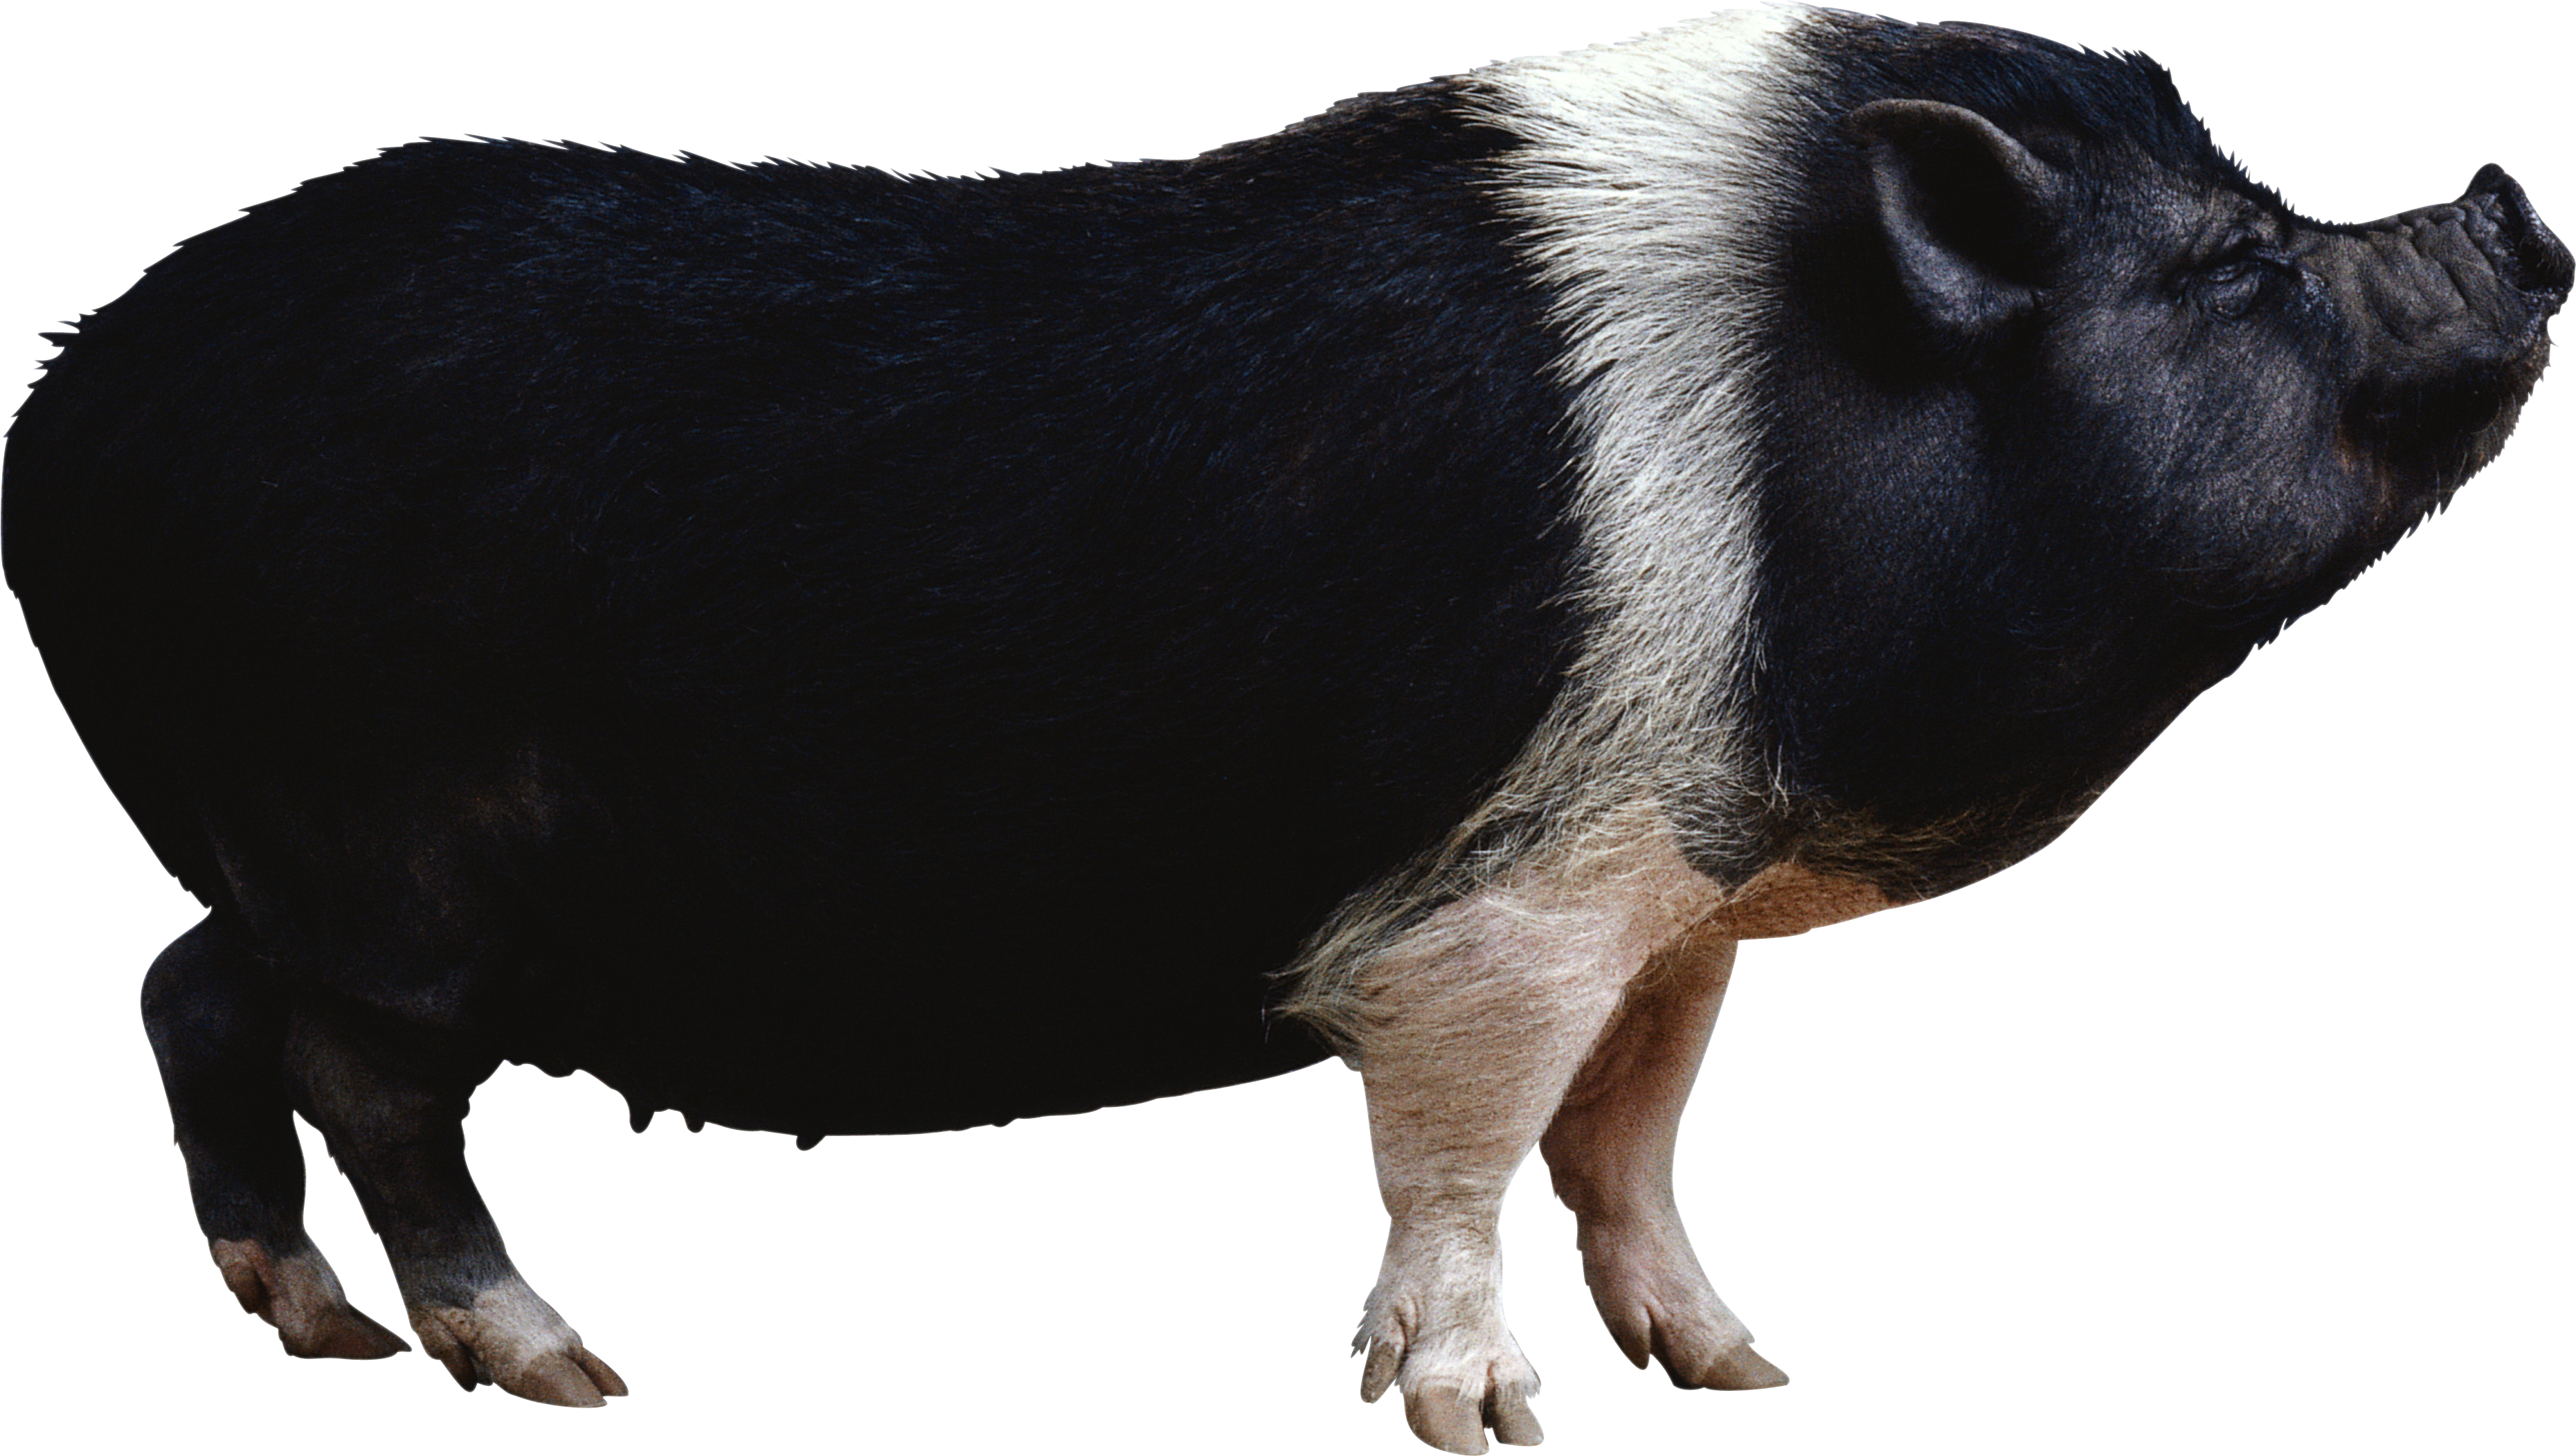 Black Pig Png Image - Pig, Transparent background PNG HD thumbnail